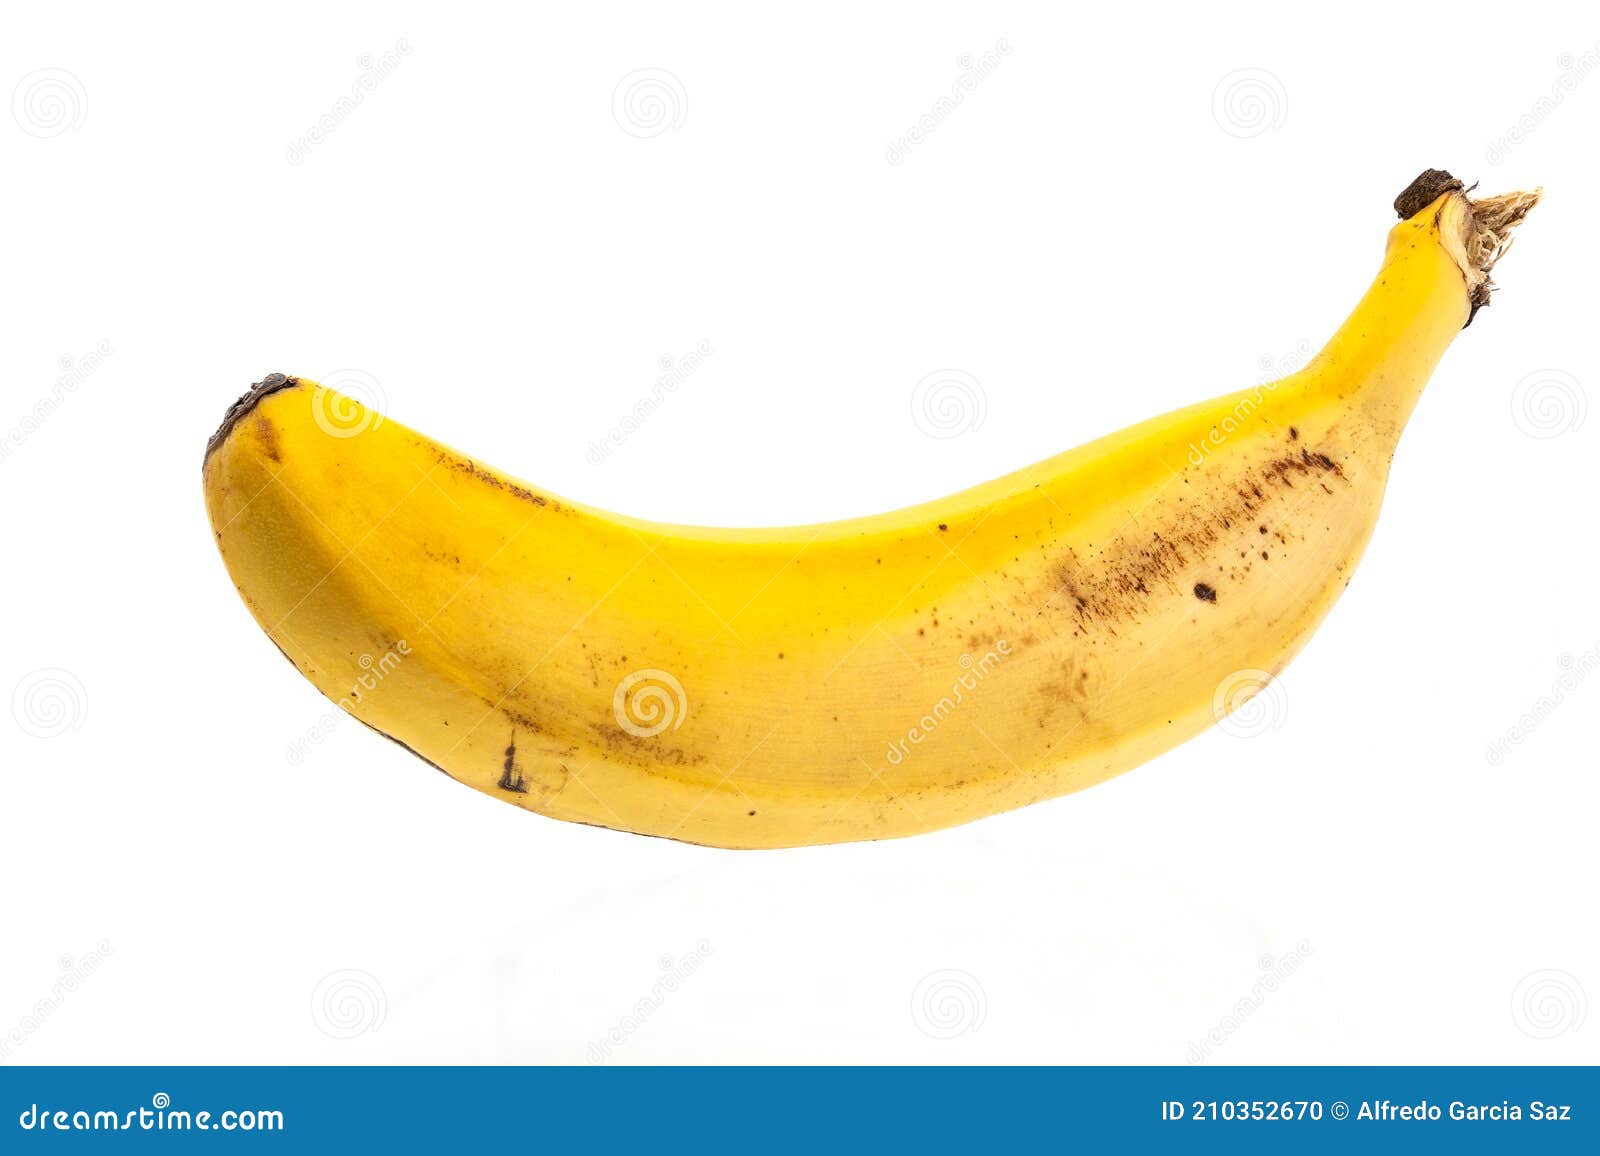 a single banana type platano de canarias  on white background